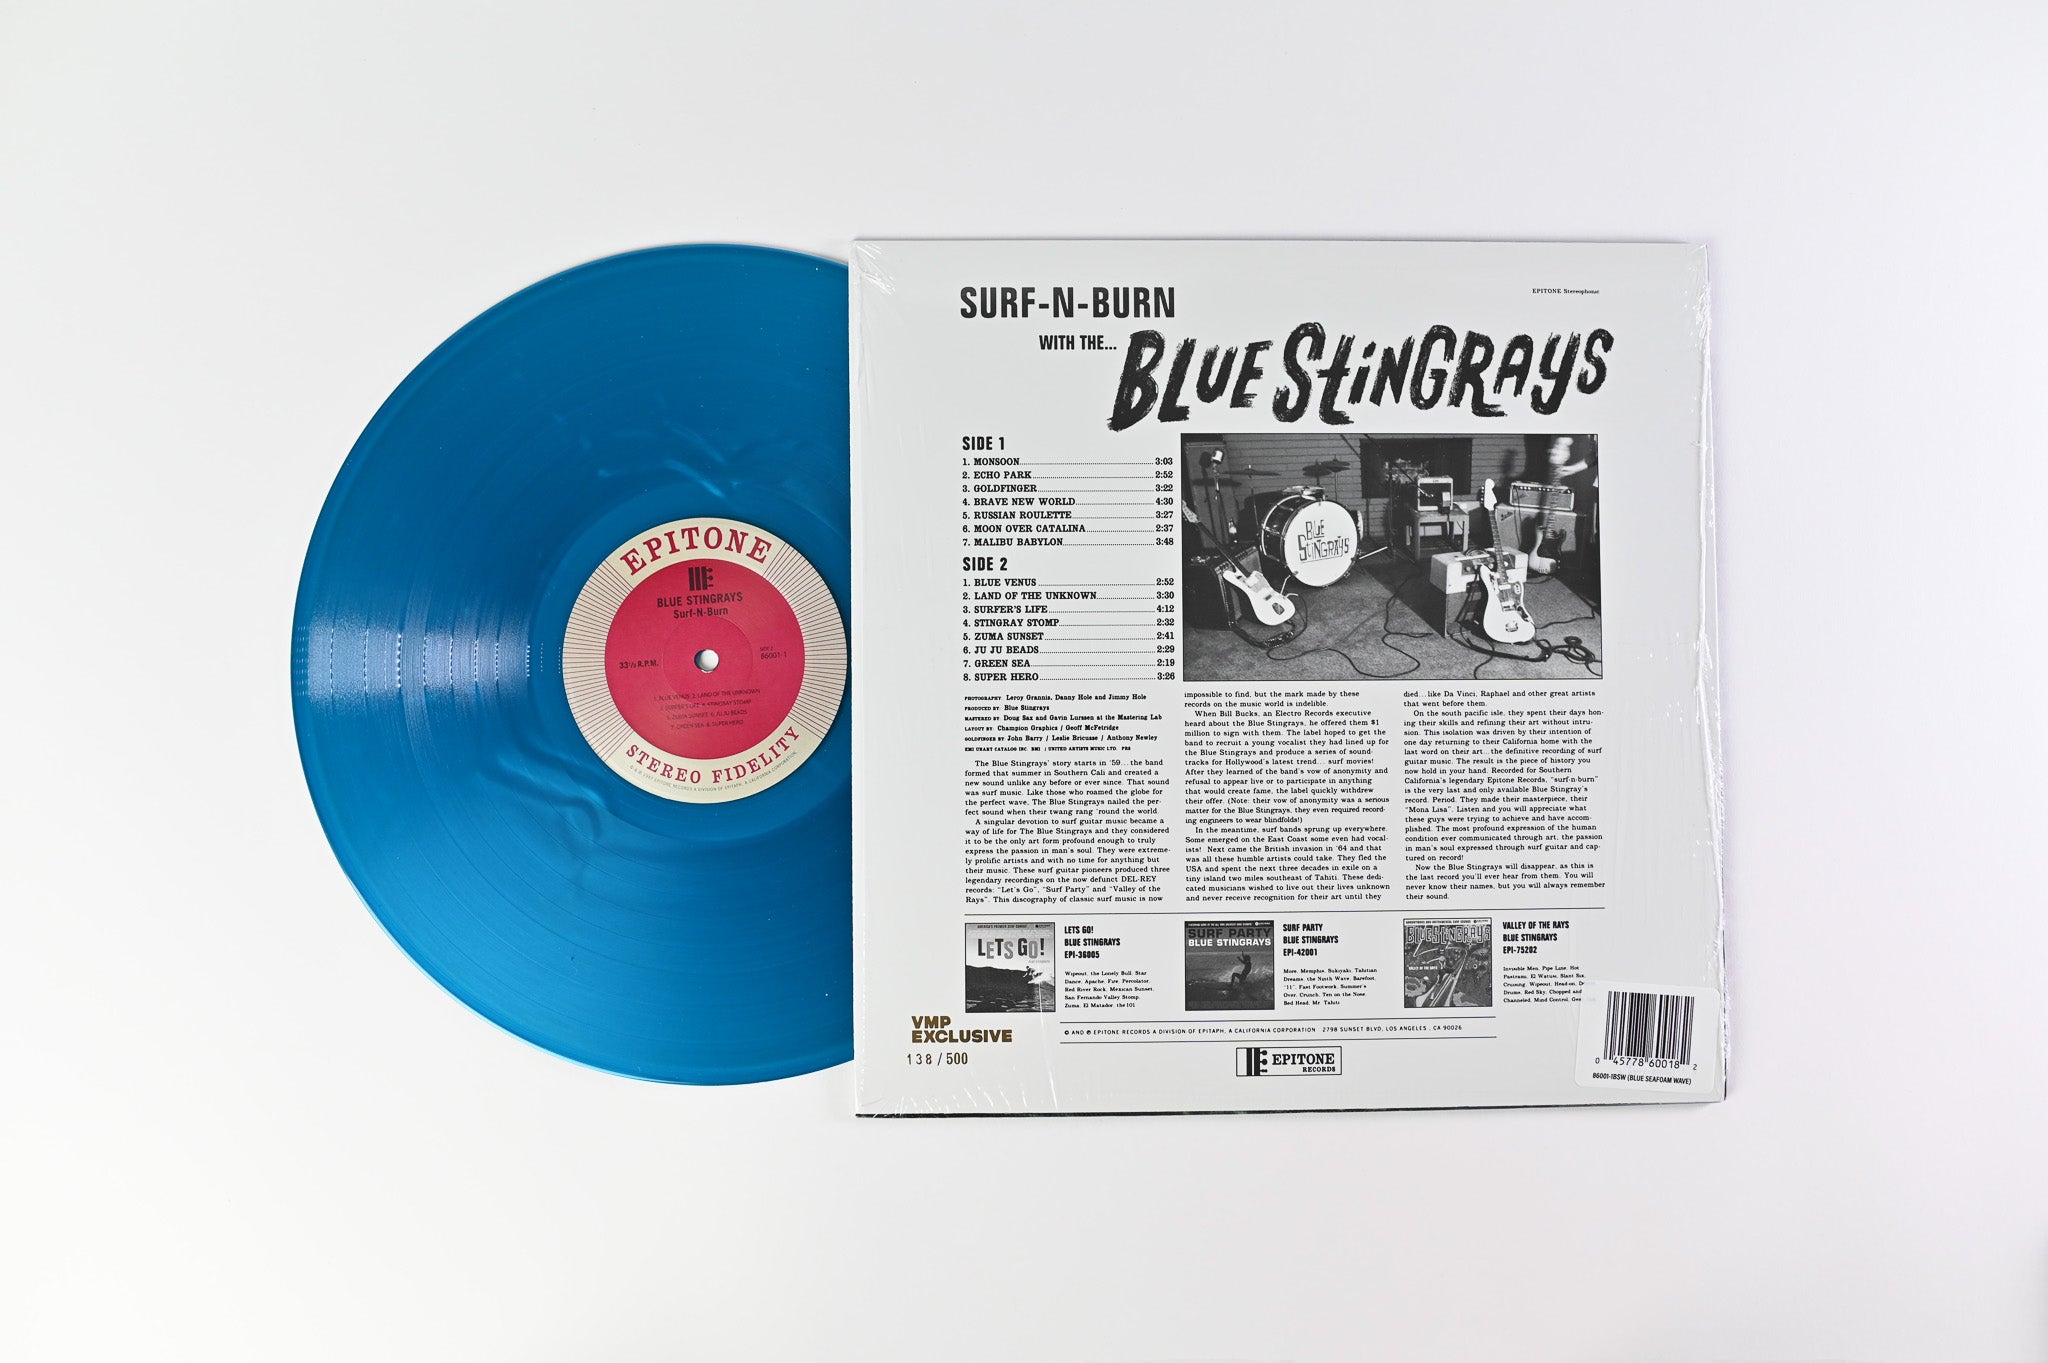 Blue Stingrays - Surf-N-Burn on Epitone Records Vinyl Me, Please Numbered Reissue on Blue Seafoam Wave Vinyl